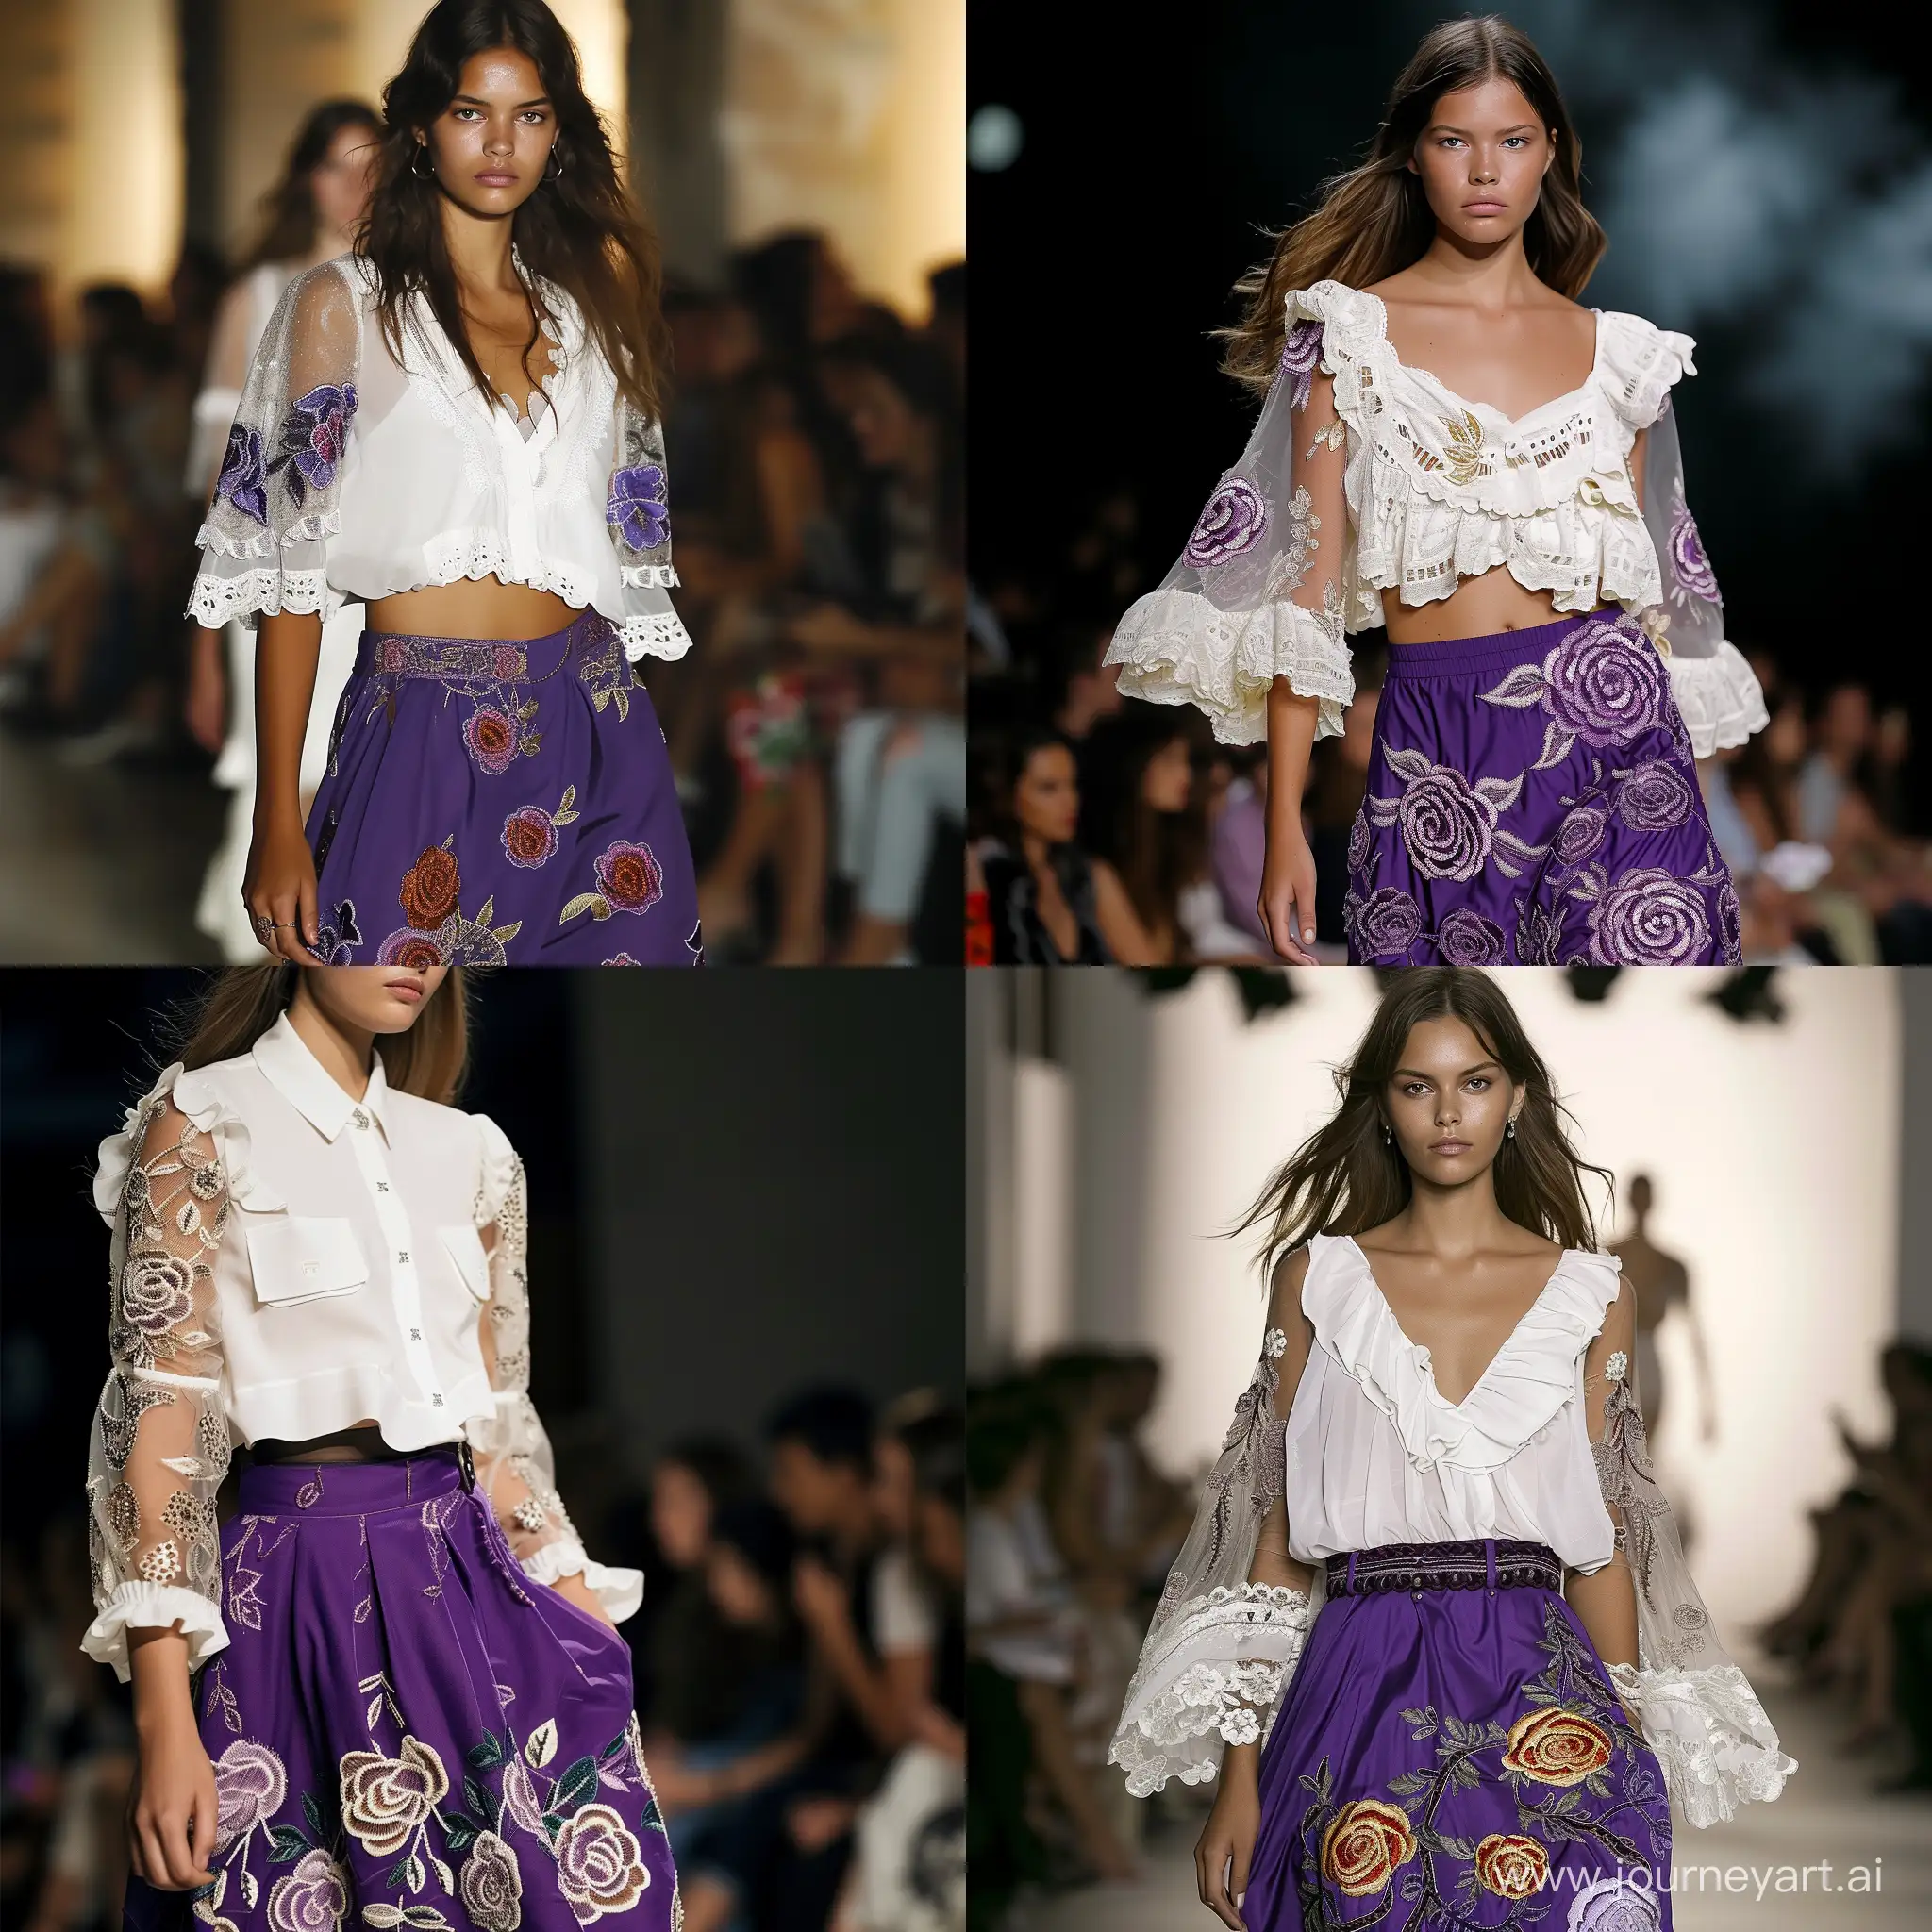 Fashion-Model-Showcasing-Elegant-White-Blouse-and-FloralAdorned-Purple-Skirt